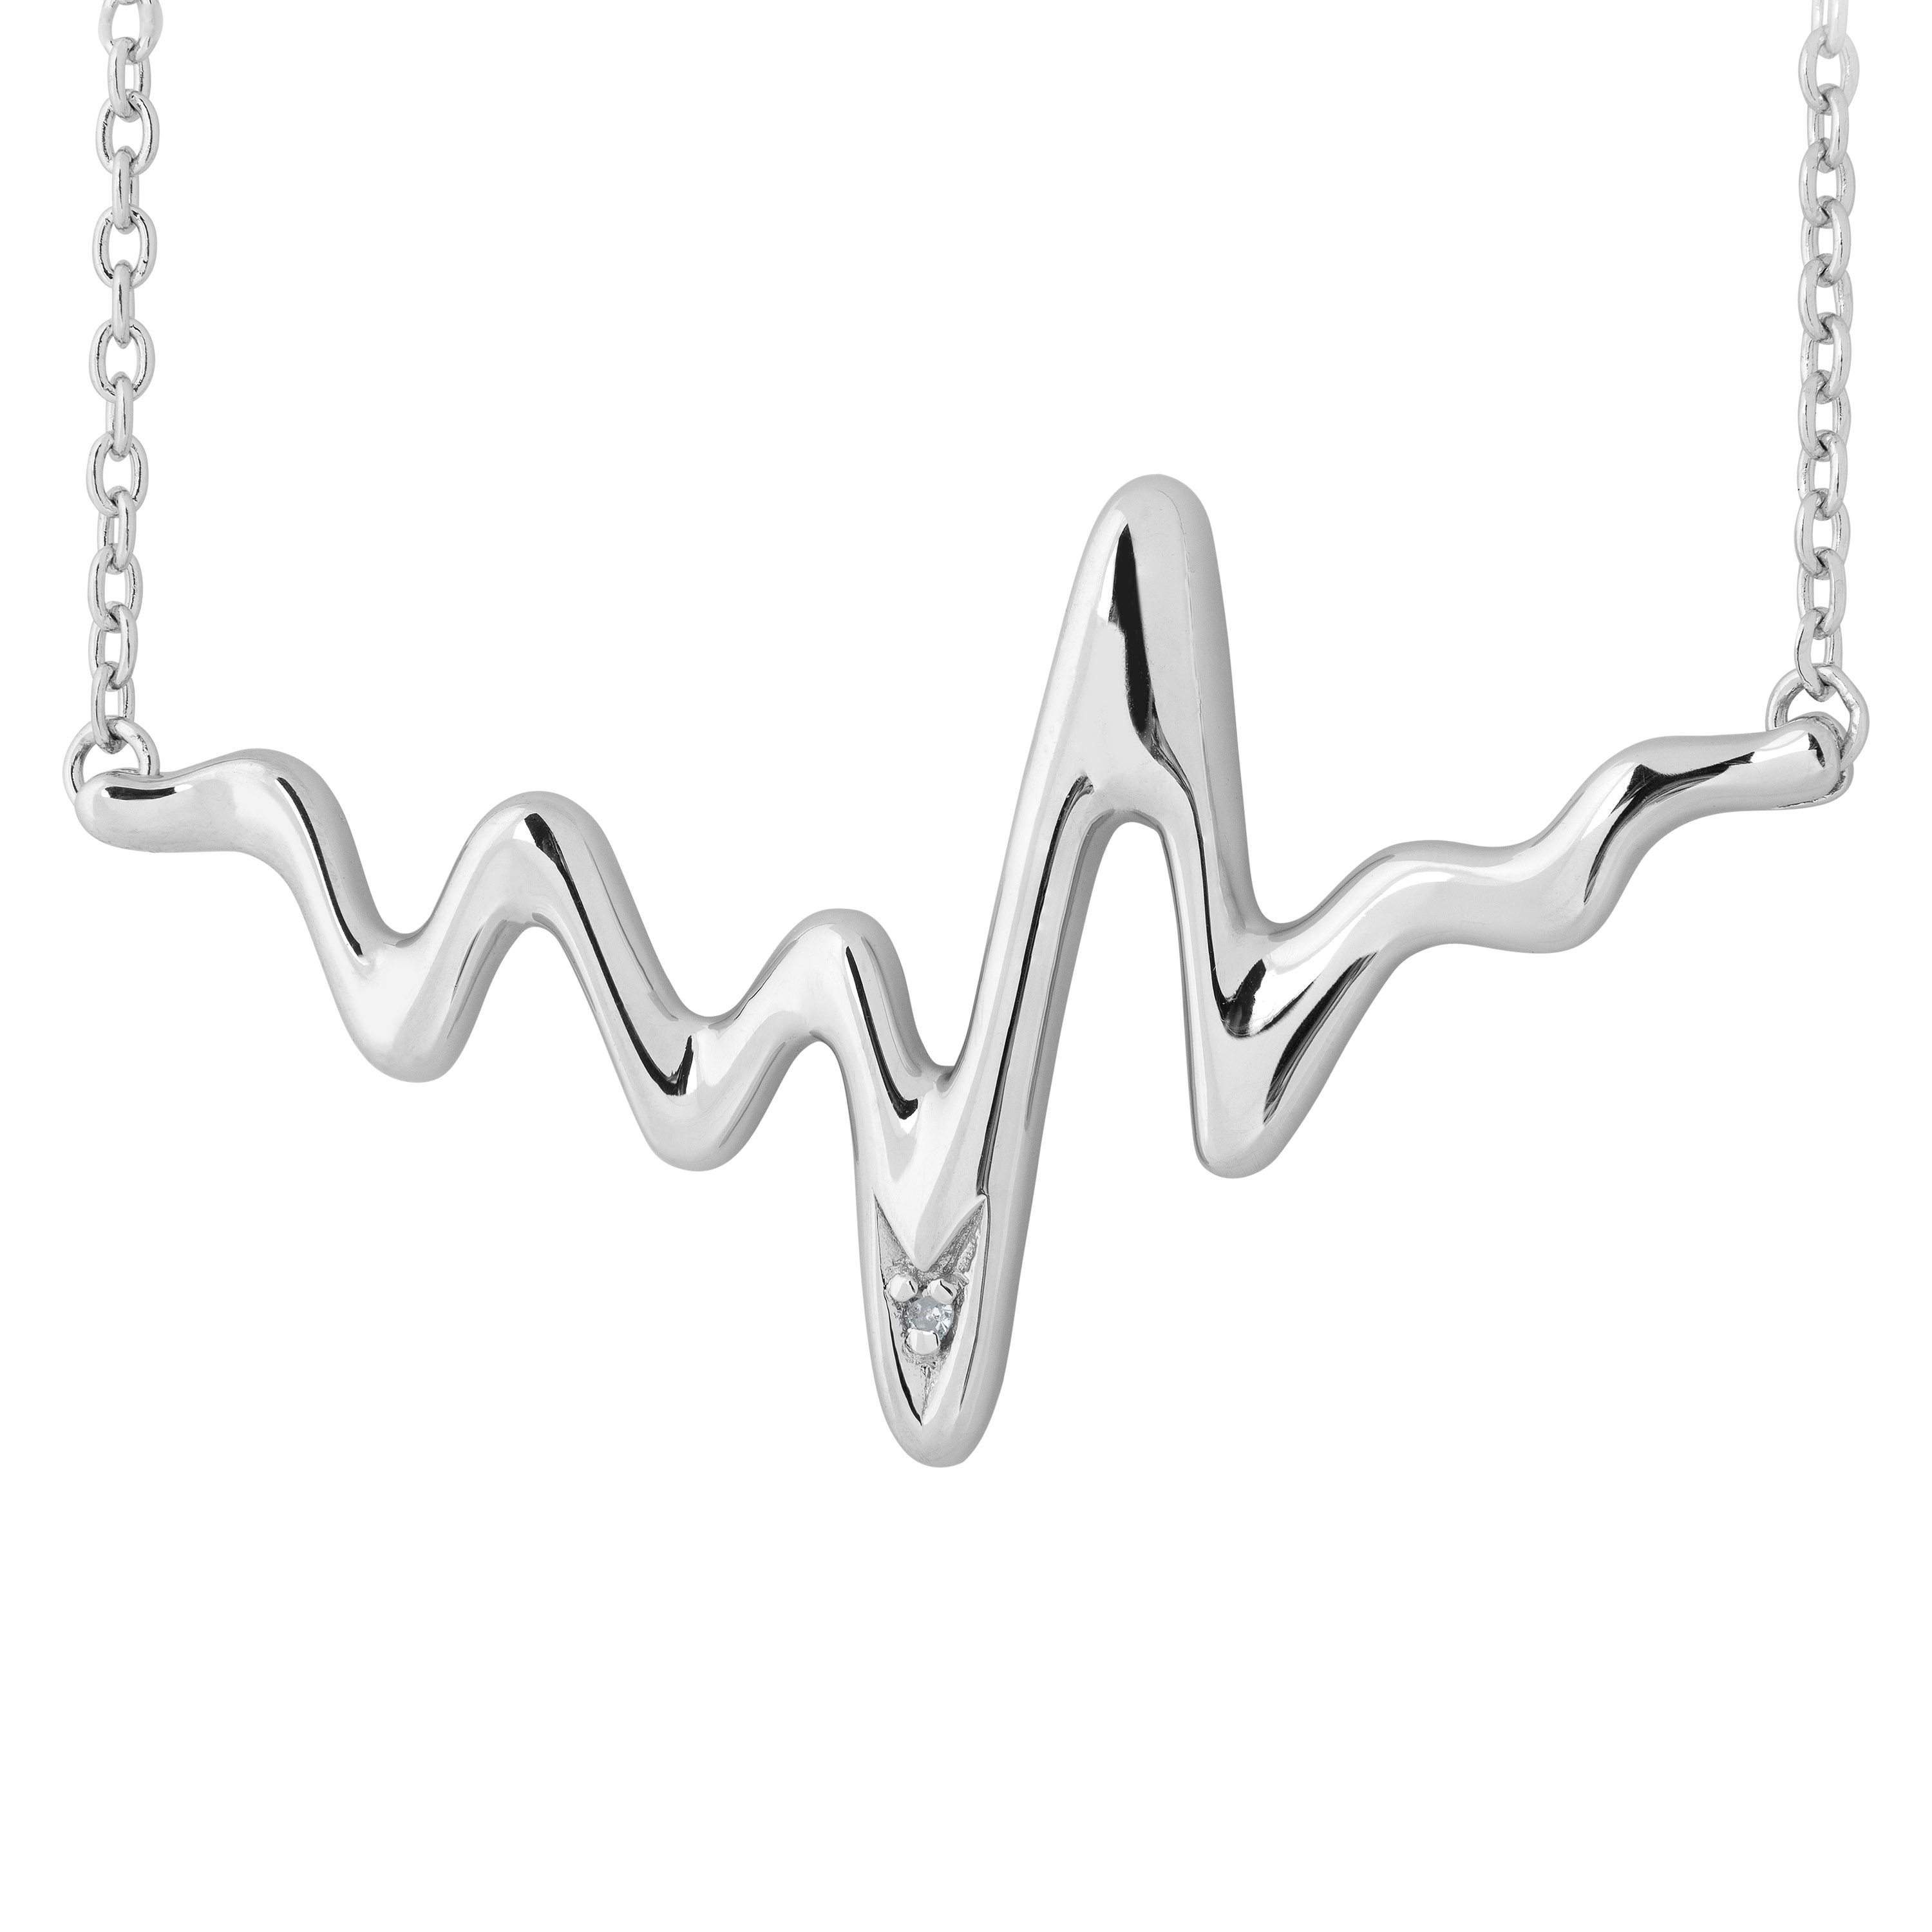 Diamond Heartbeat Pendant Necklace, Sterling Silver. 